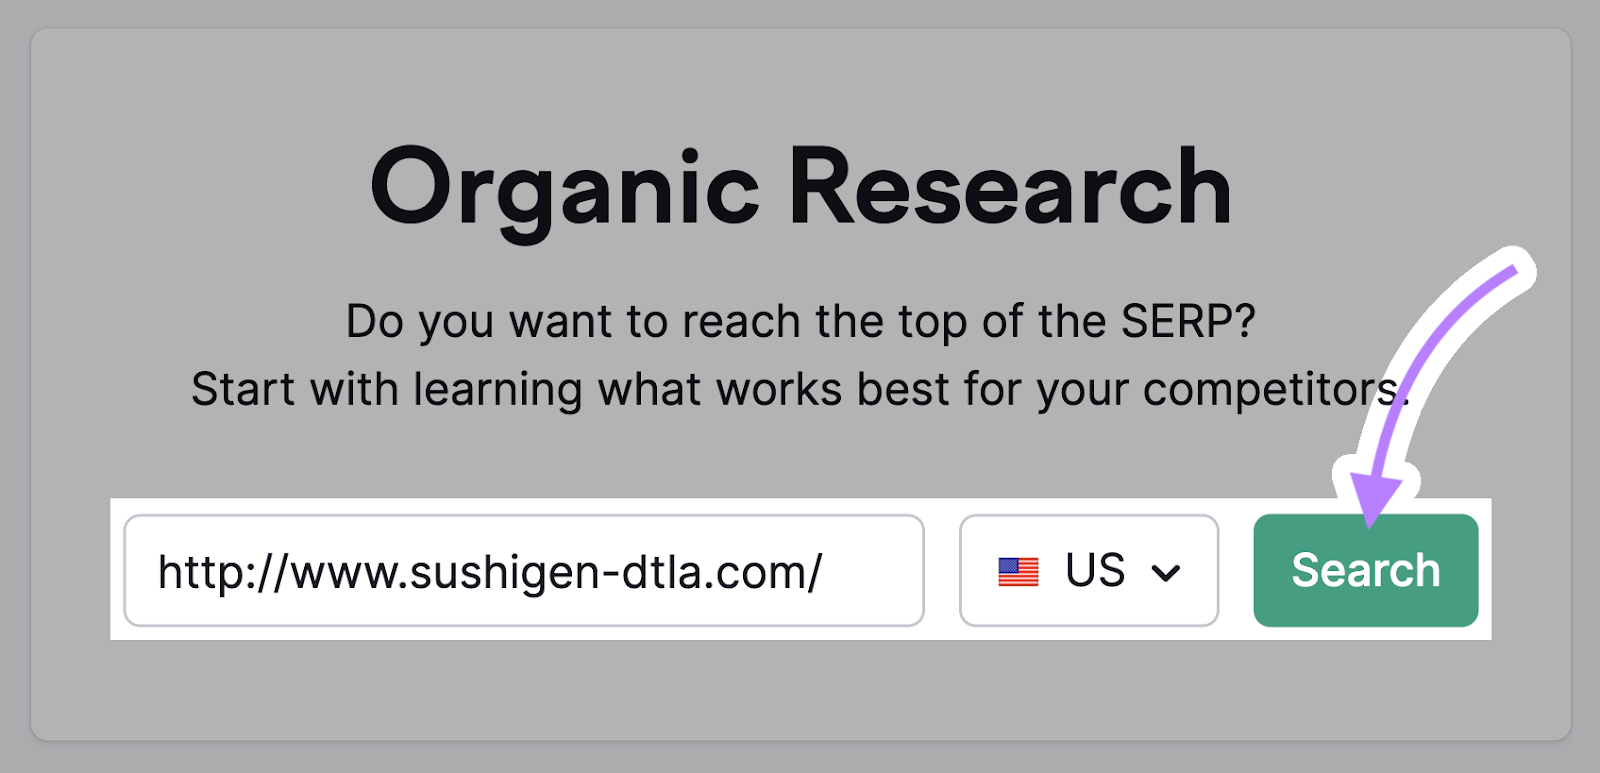 Semrush’s Organic Research tool